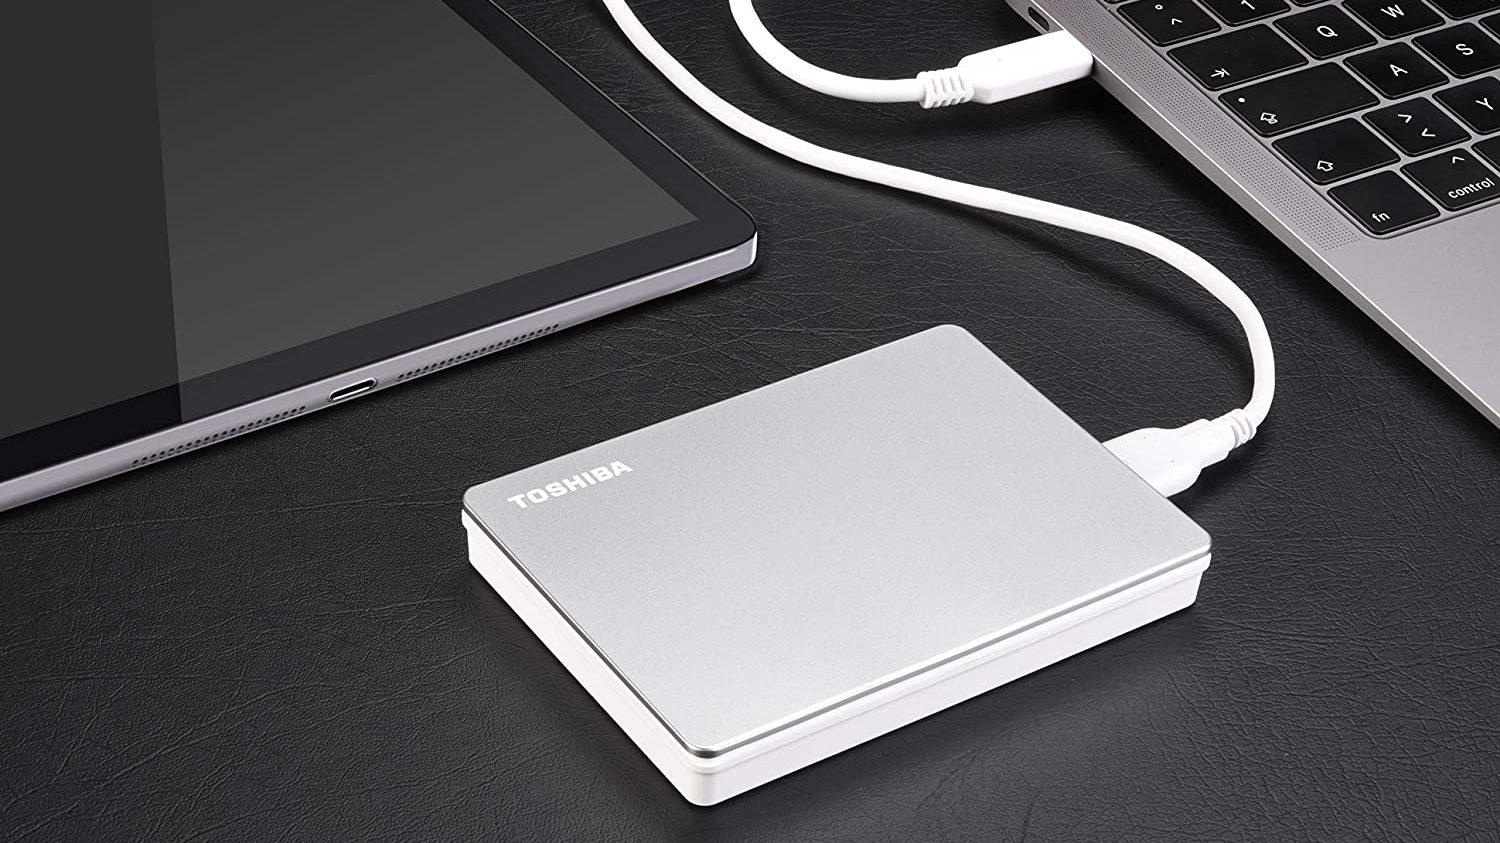 1tb external hard drive for macbook air